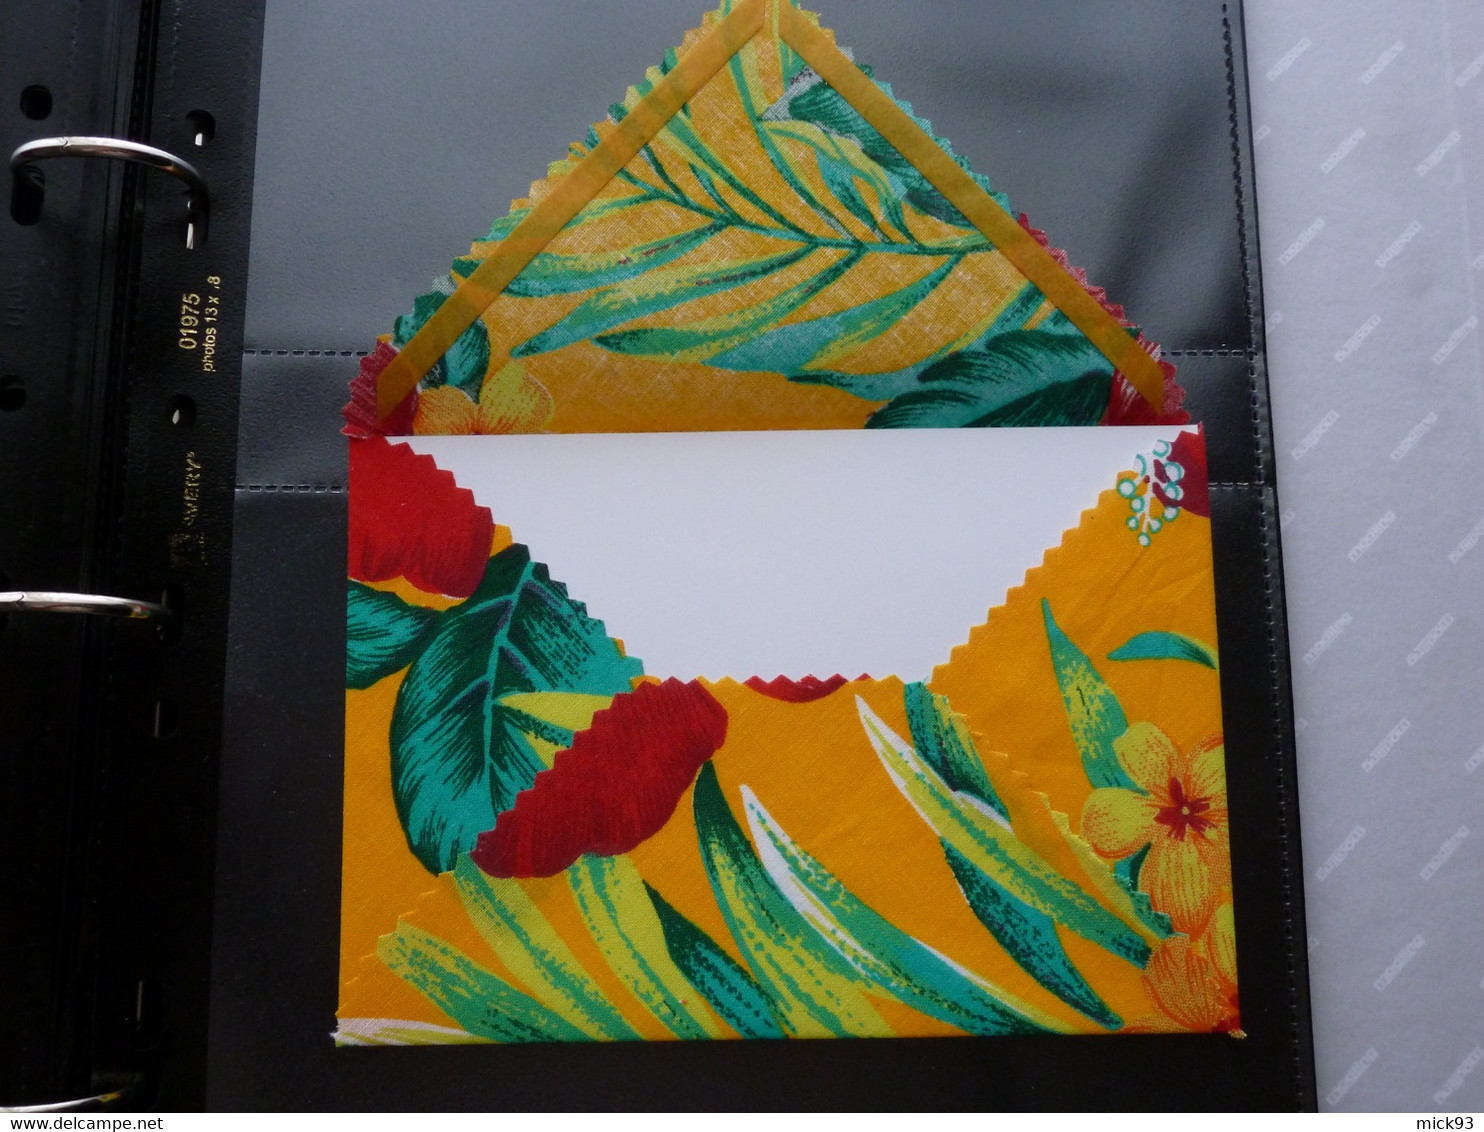 Polynésie  4 enveloppes en tissu tahitien (salon 2008 )